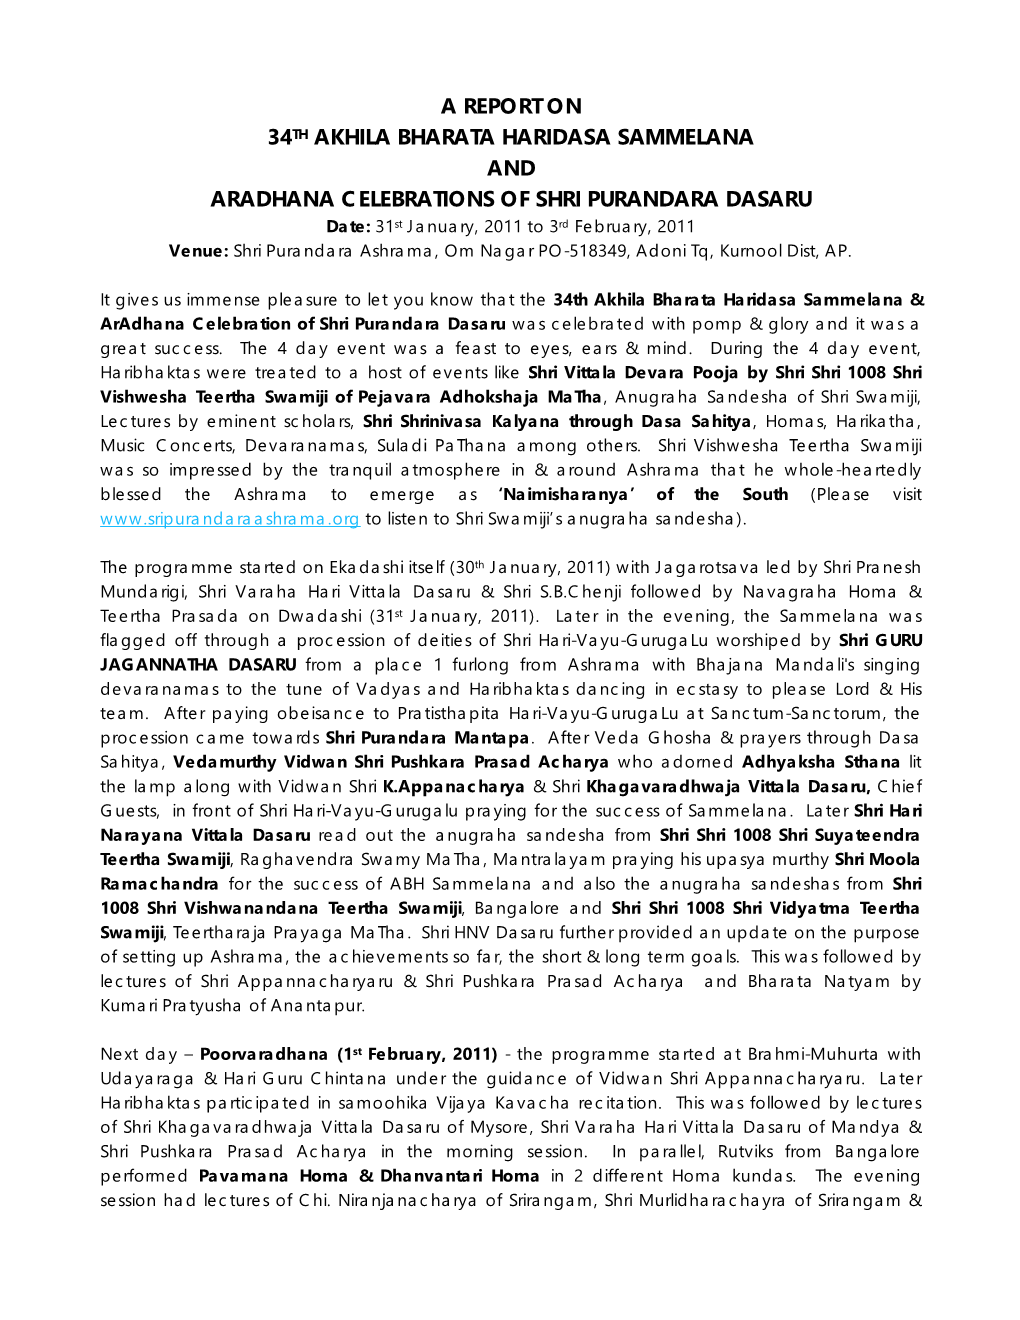 A Report on 34Th Akhila Bharata Haridasa